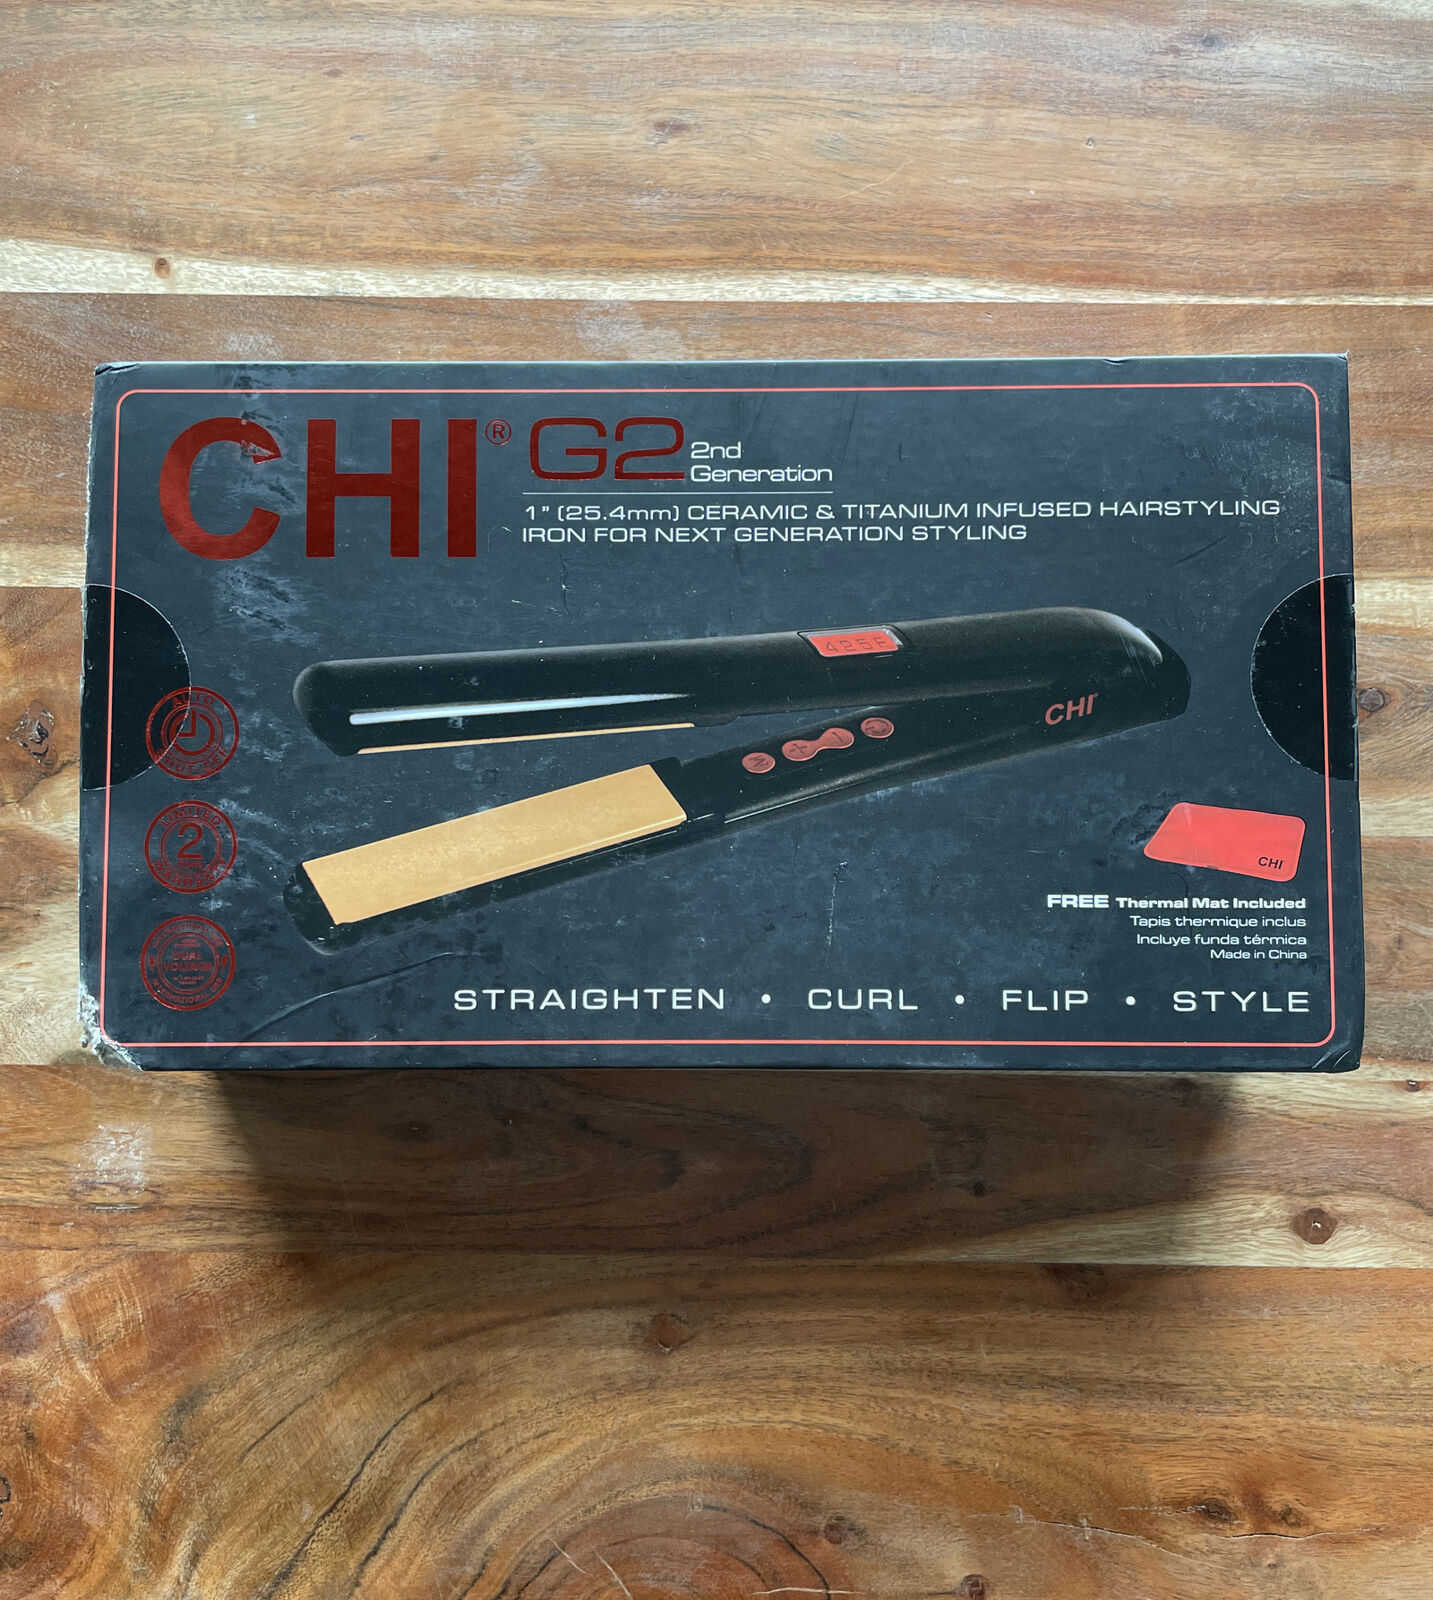 CHI PRO G2 Digital Titanium Infused Ceramic 1" Straightening Hairstyling Iron